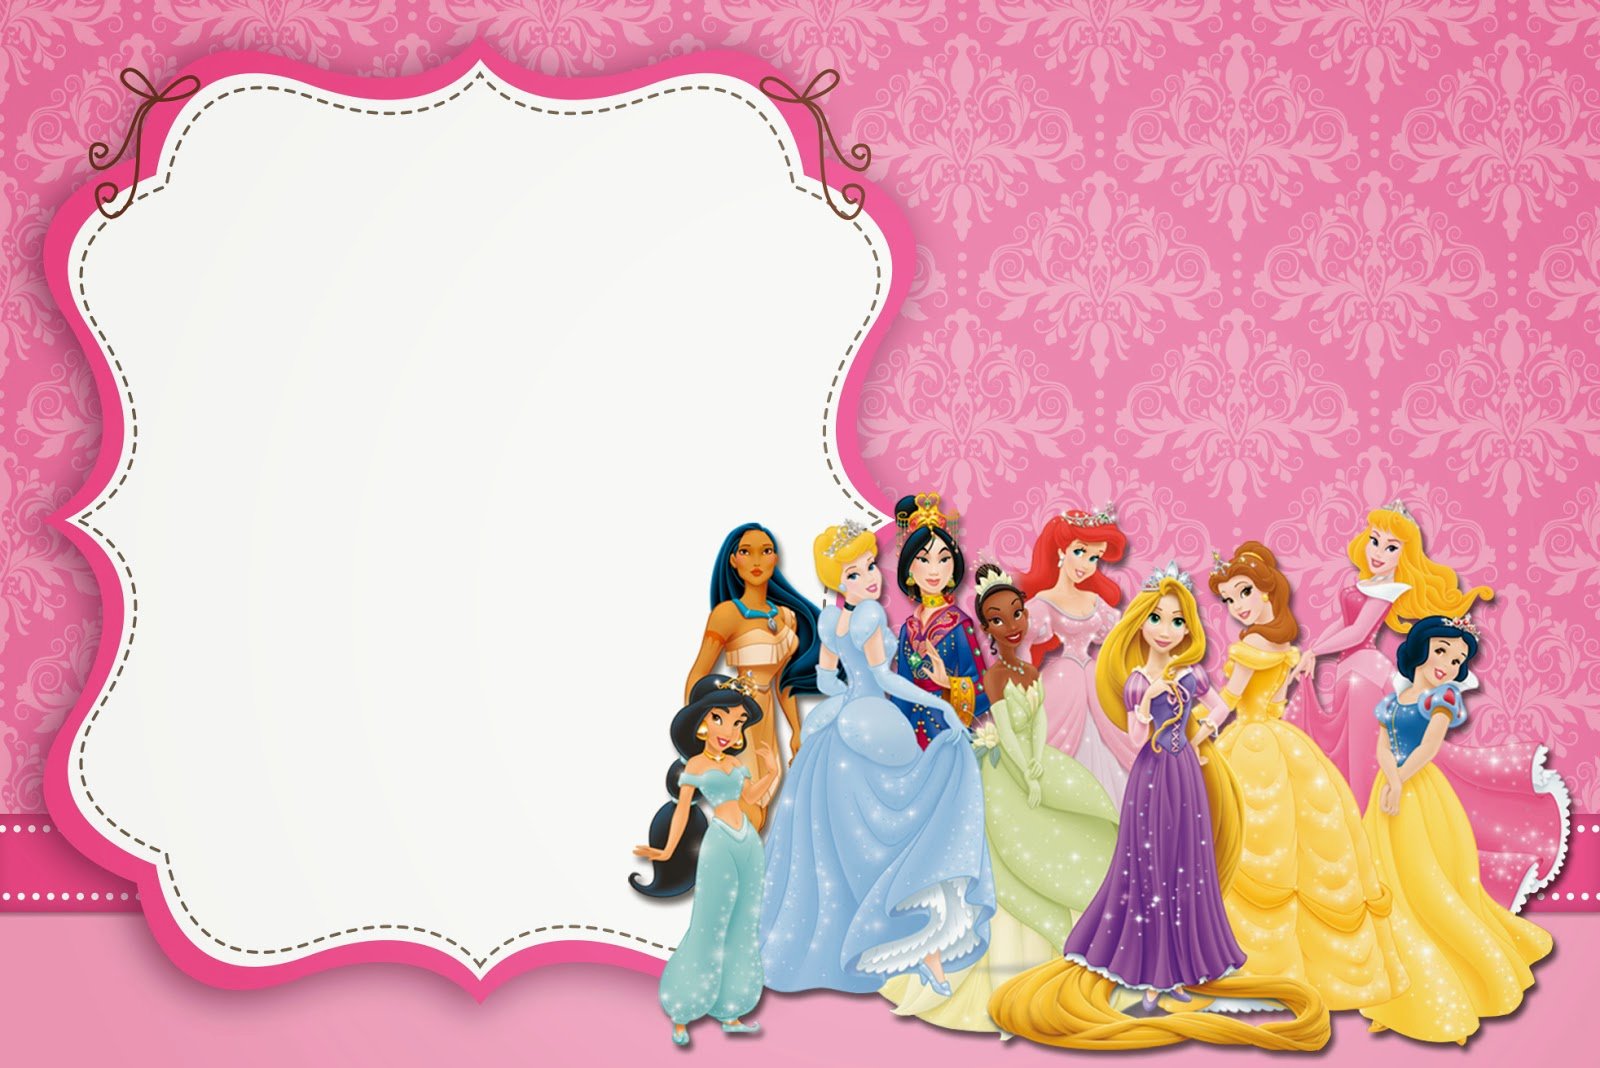 Disney Princess Party Free Printable Party Invitations